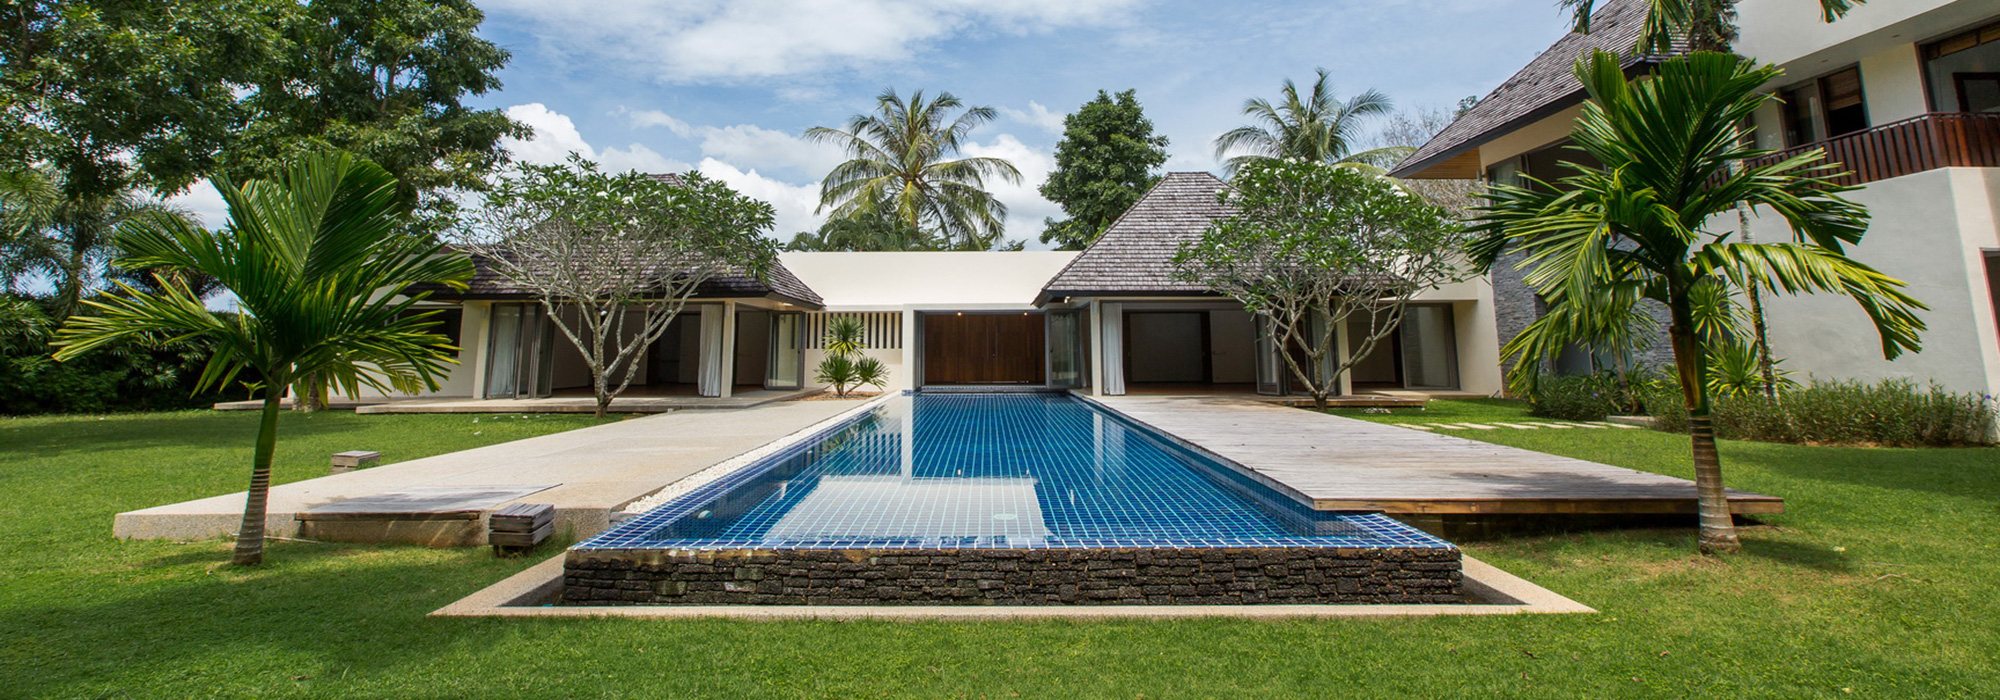 Pool Villa for Rent in Phuket. 5 bedrooms ⭐⭐⭐⭐